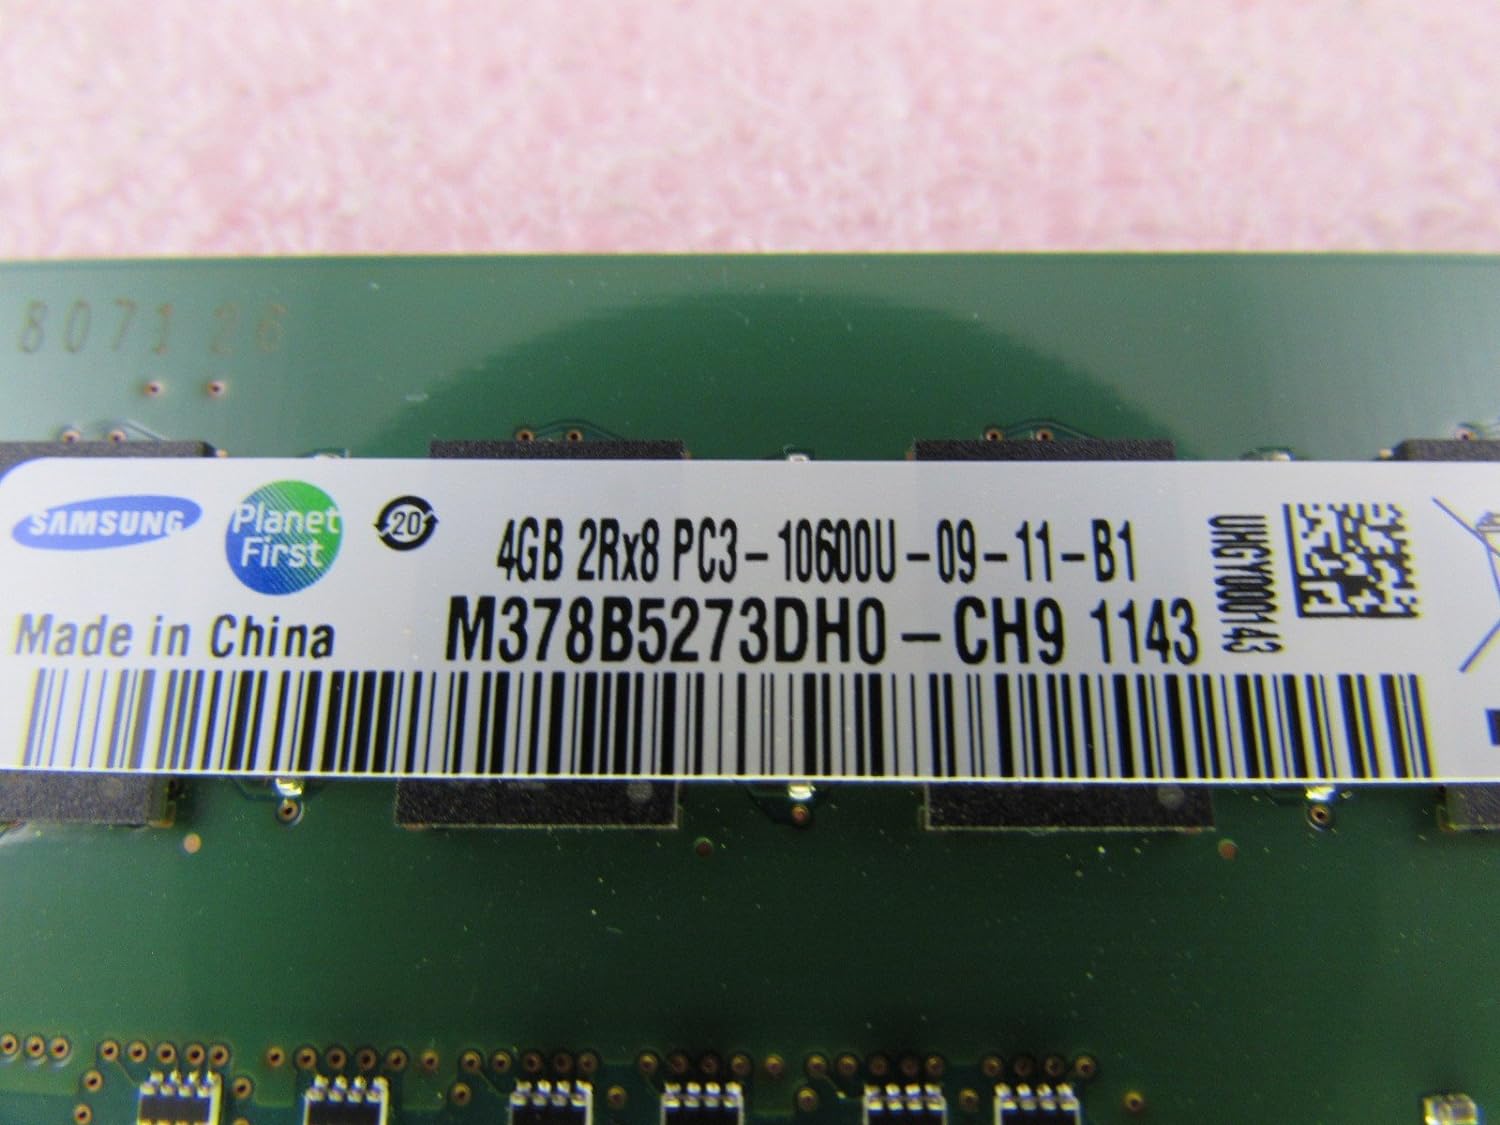 Exist Shuraba Locker 260887480160 Samsung 4GB PC3-10600U DDR3 1333MHz DIMM 240 Pin Memory  M378B5273DH0-CH9